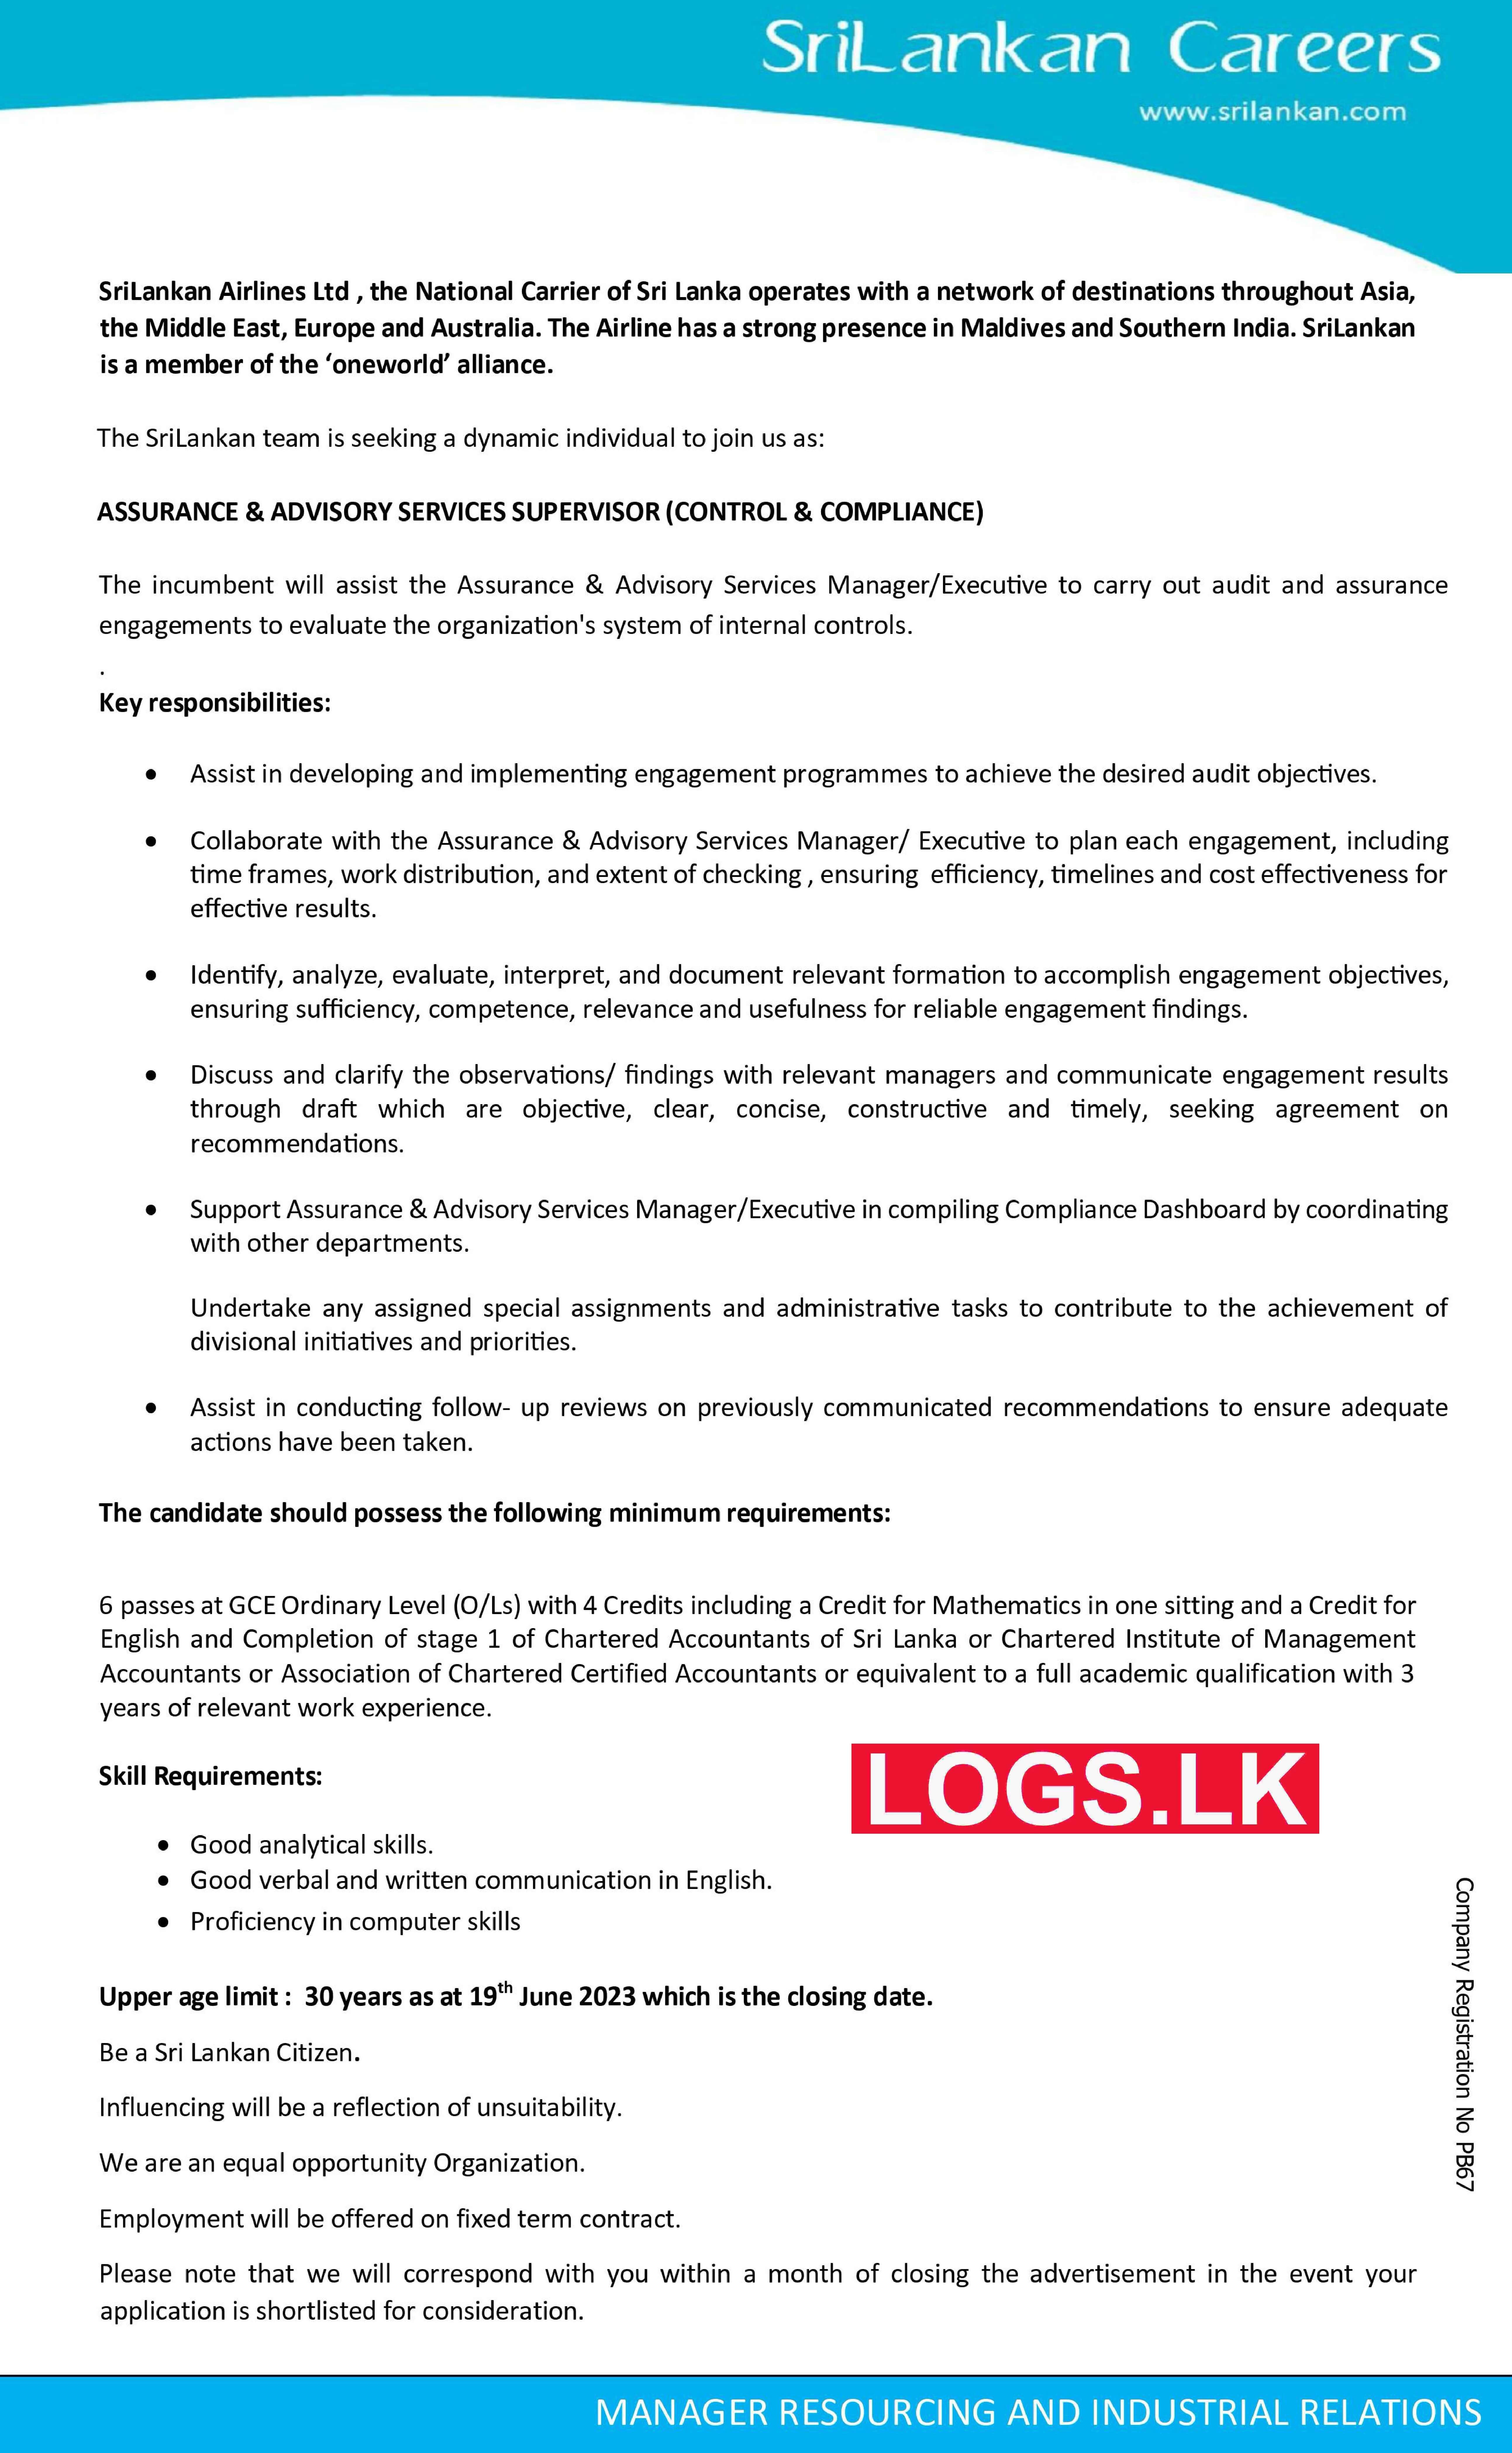 Assurance Advisory Services Supervisor - Sri Lankan Airlines Vacancies 2023 Application Form, Details Download